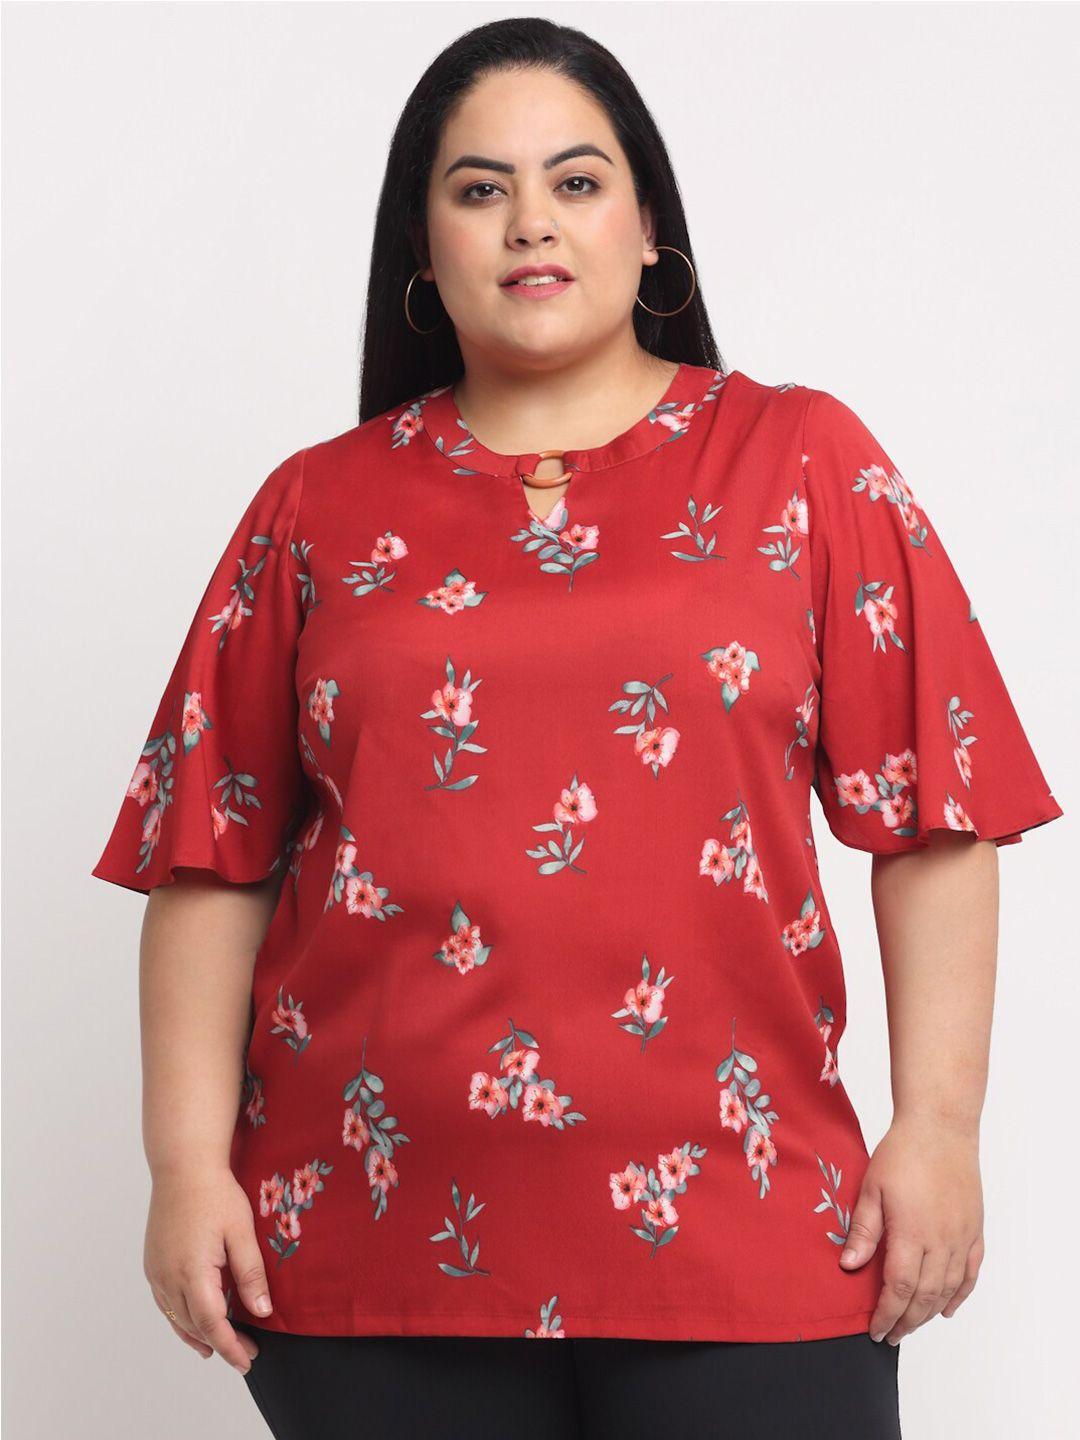 pluss-women-plus-size-red-floral-print-top